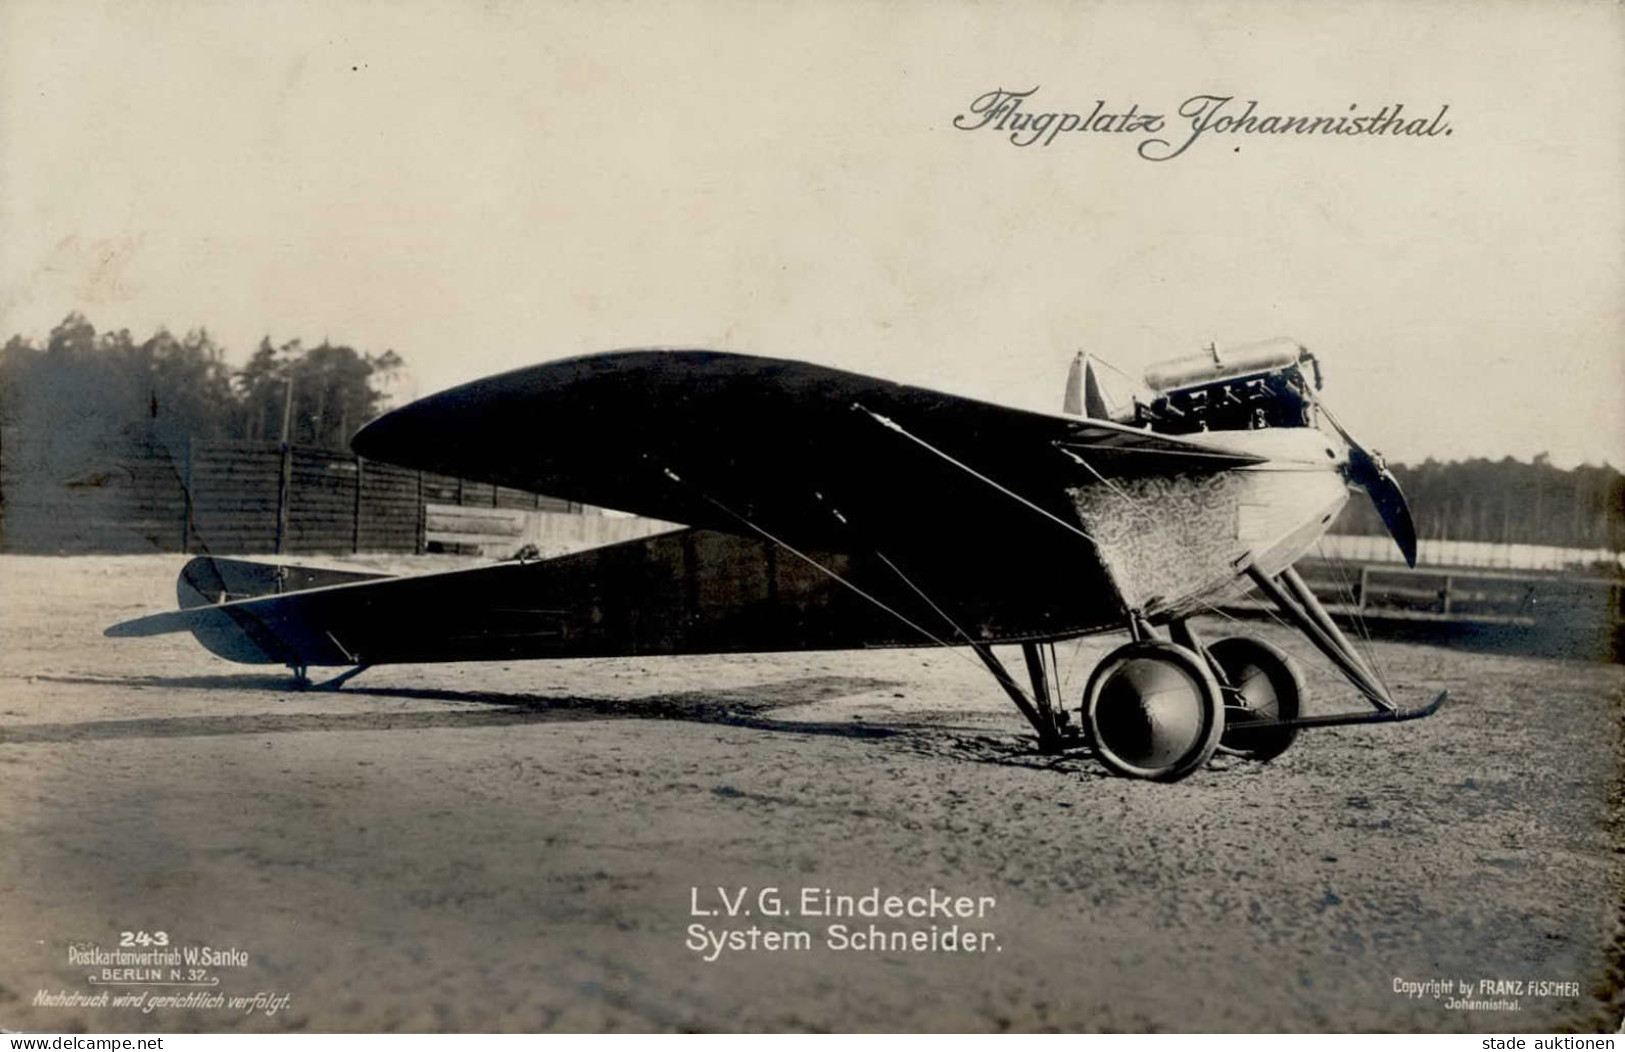 Sanke Flugzeug 243 L.V.G. Eindecker System Schneider Foto-AK I-II Aviation - Guerre 1914-18